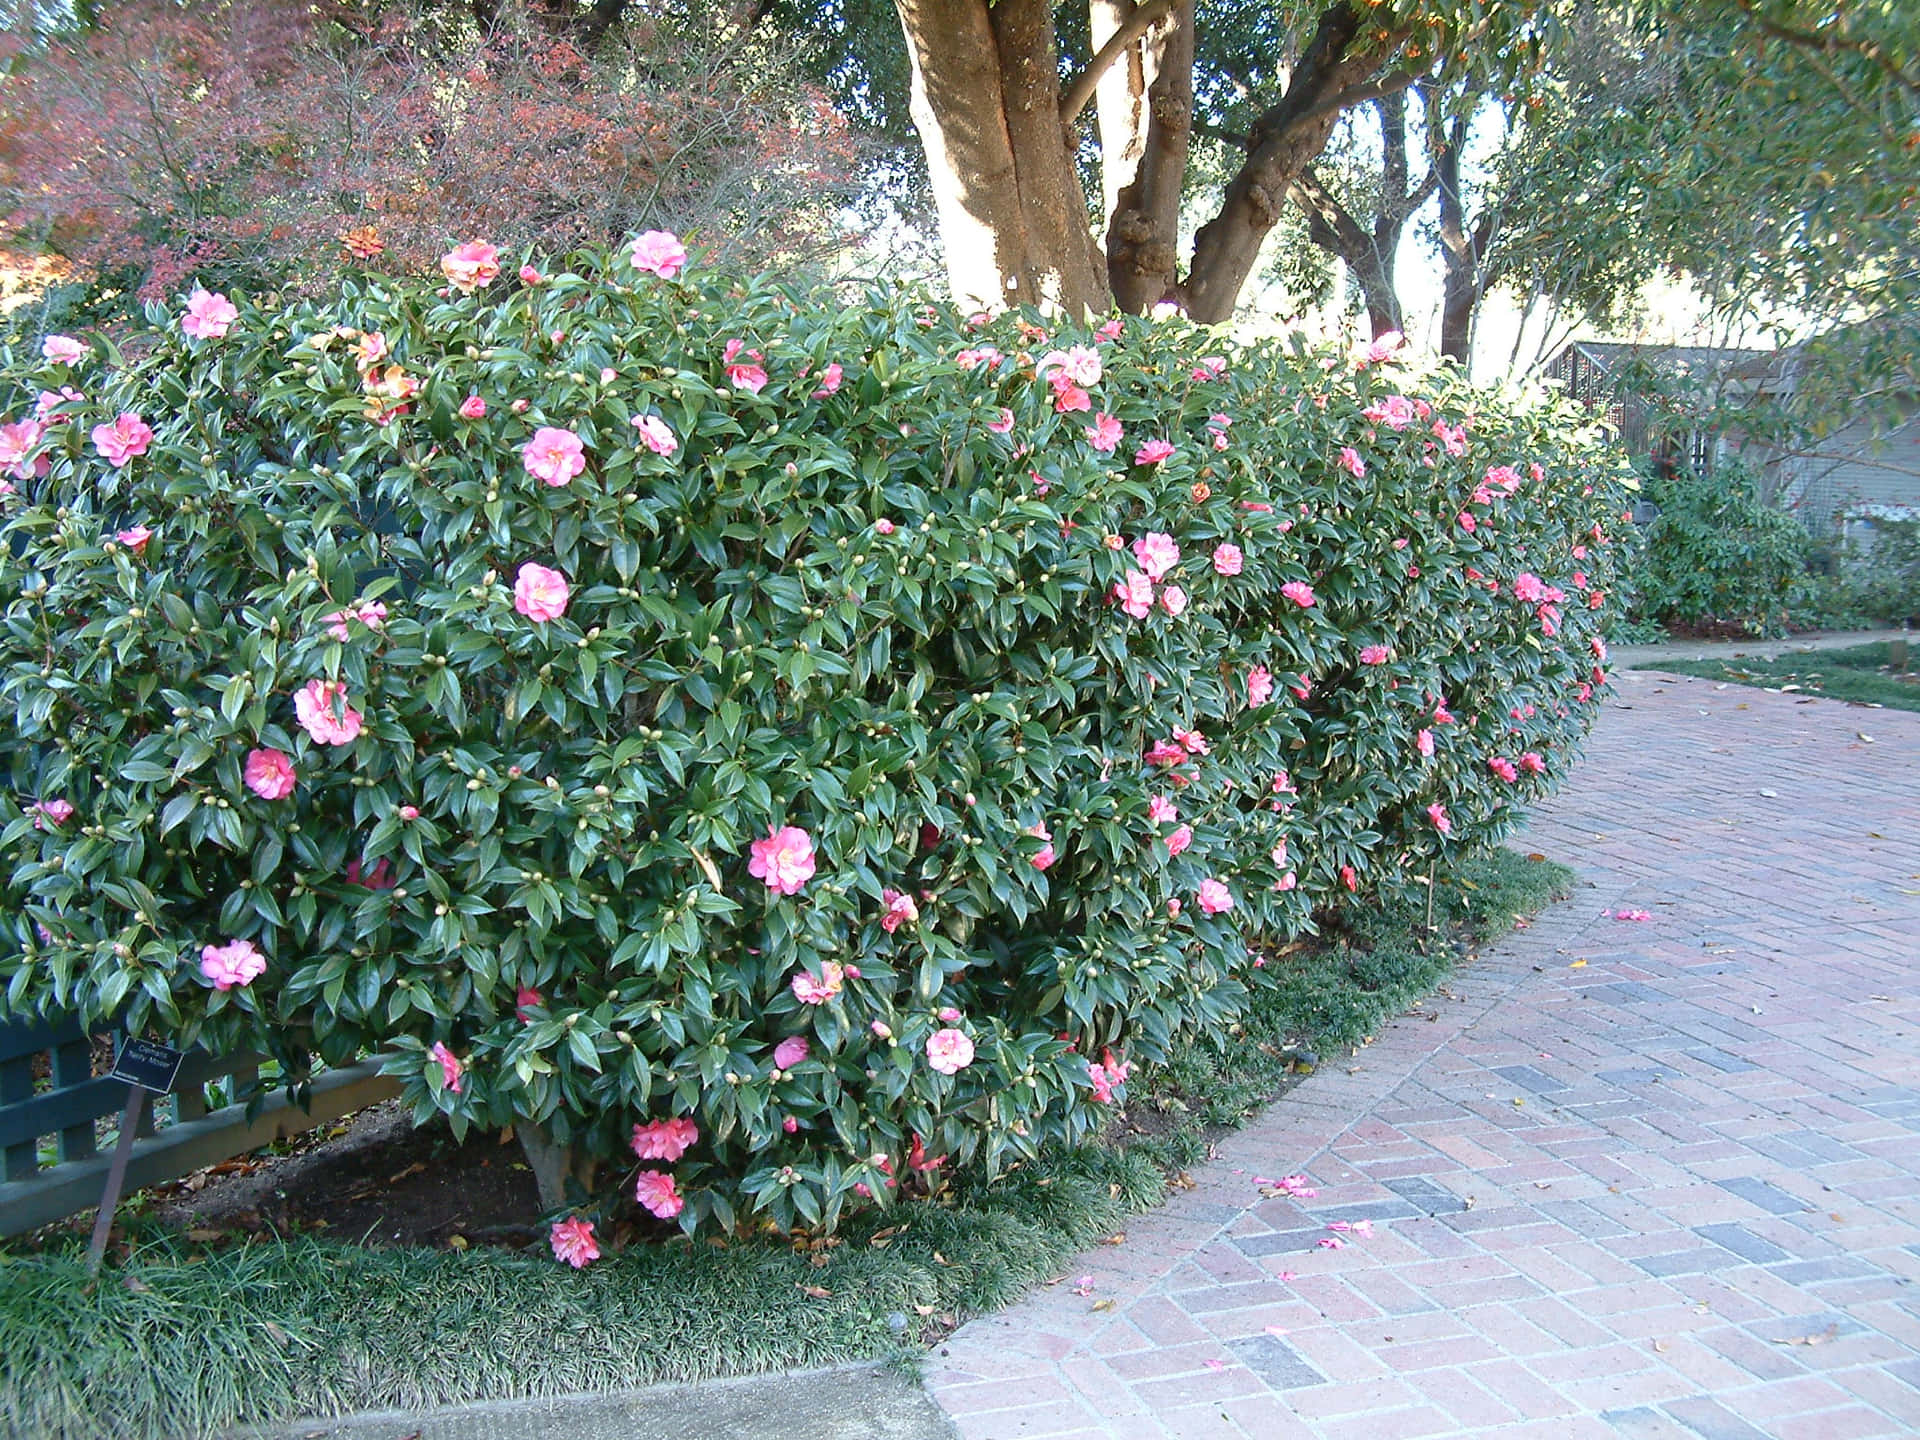 "The beautiful and delicate Camellia Sasanqua"